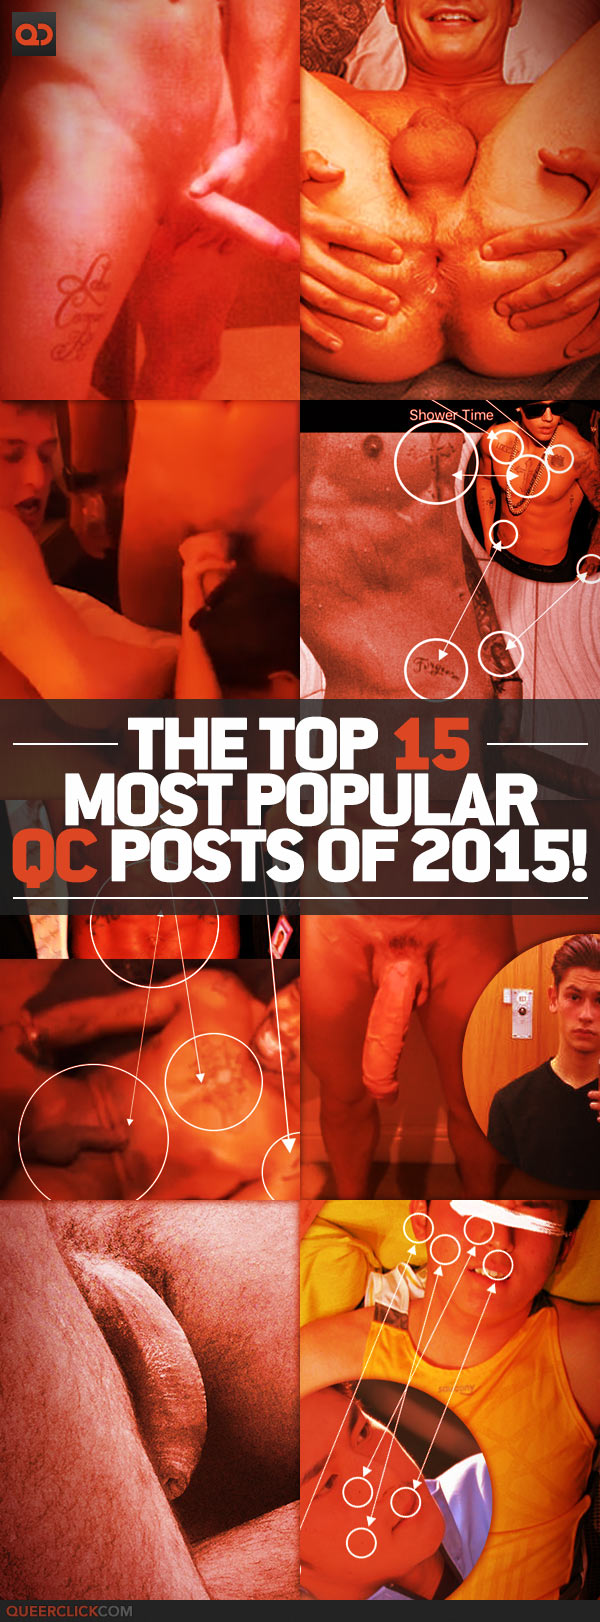 The Top 15 Most Popular QC Posts Of 2015!